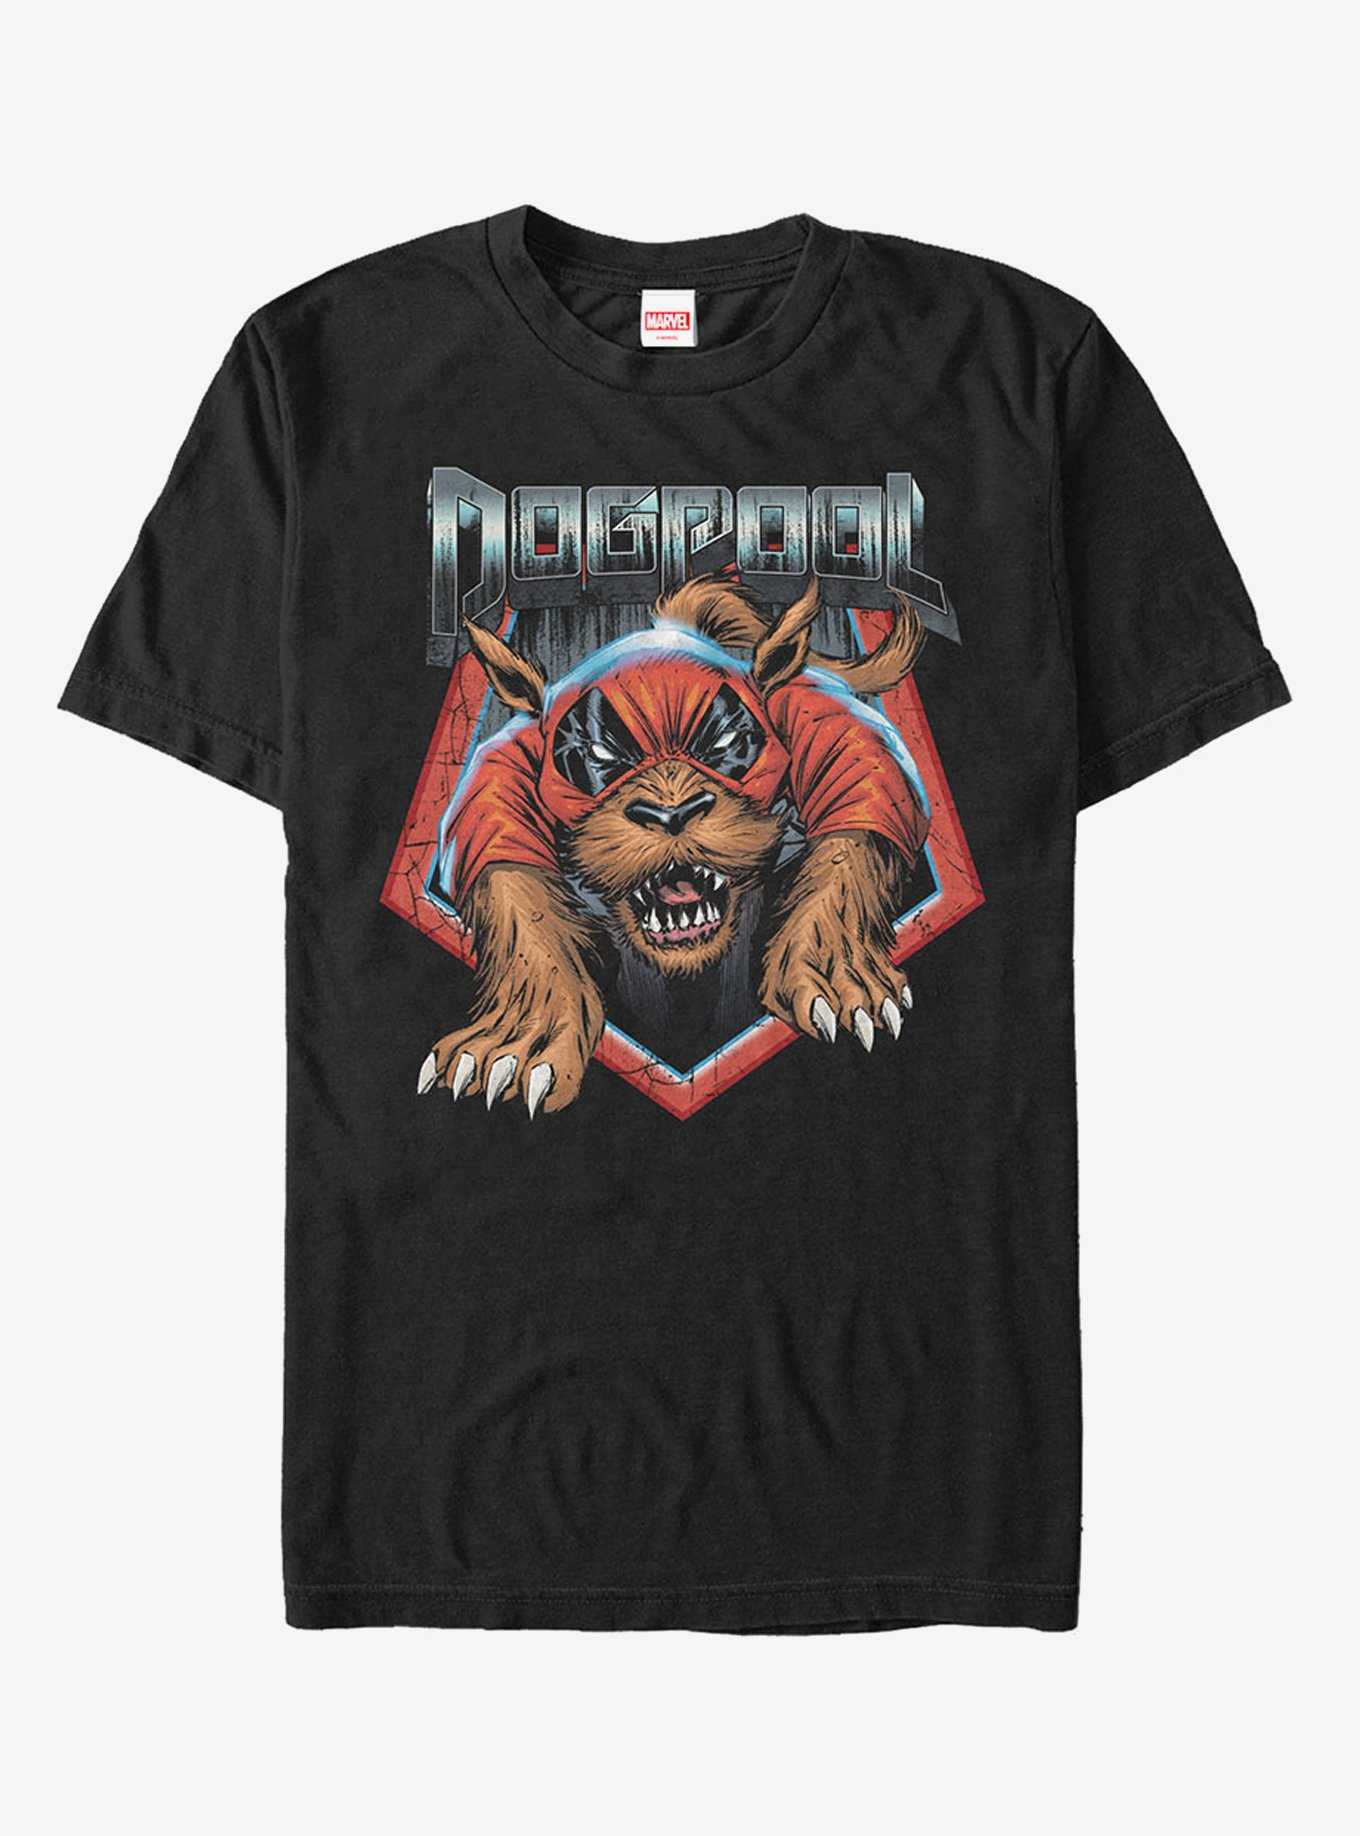 Marvel Deadpool Dogpool Paws T-Shirt, , hi-res